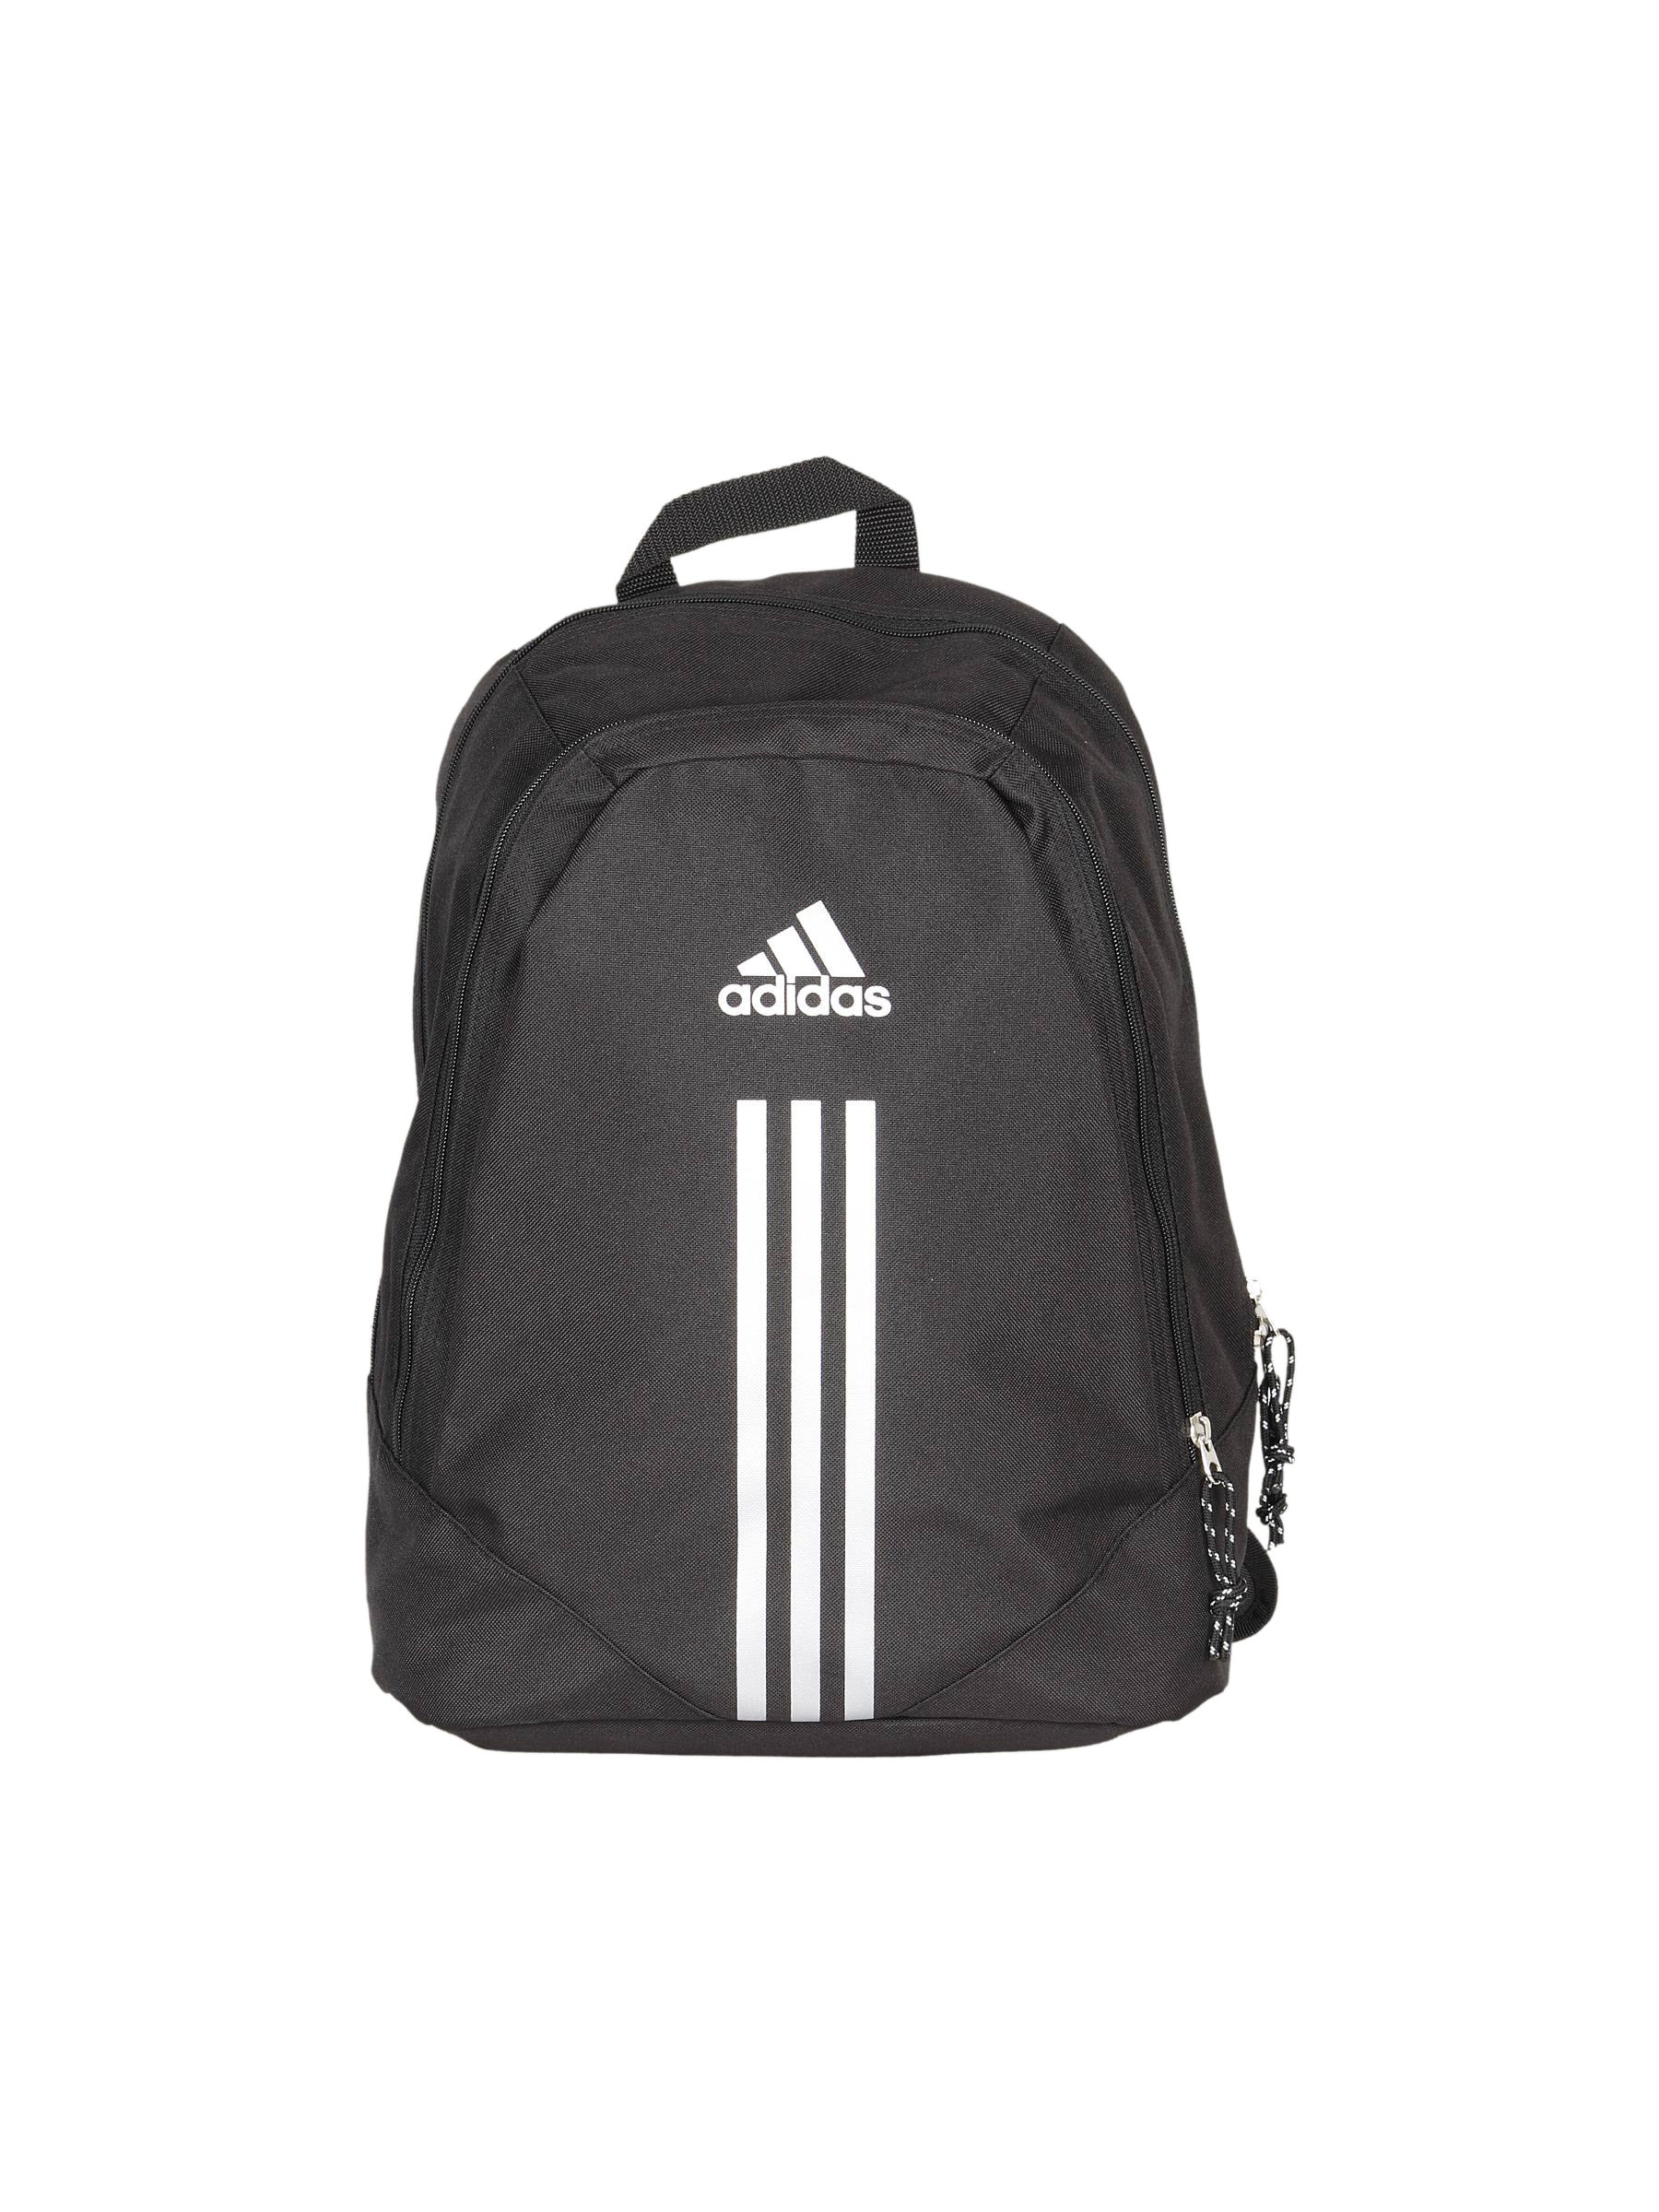 ADIDAS Unisex BP 3S Black Silver Backpack